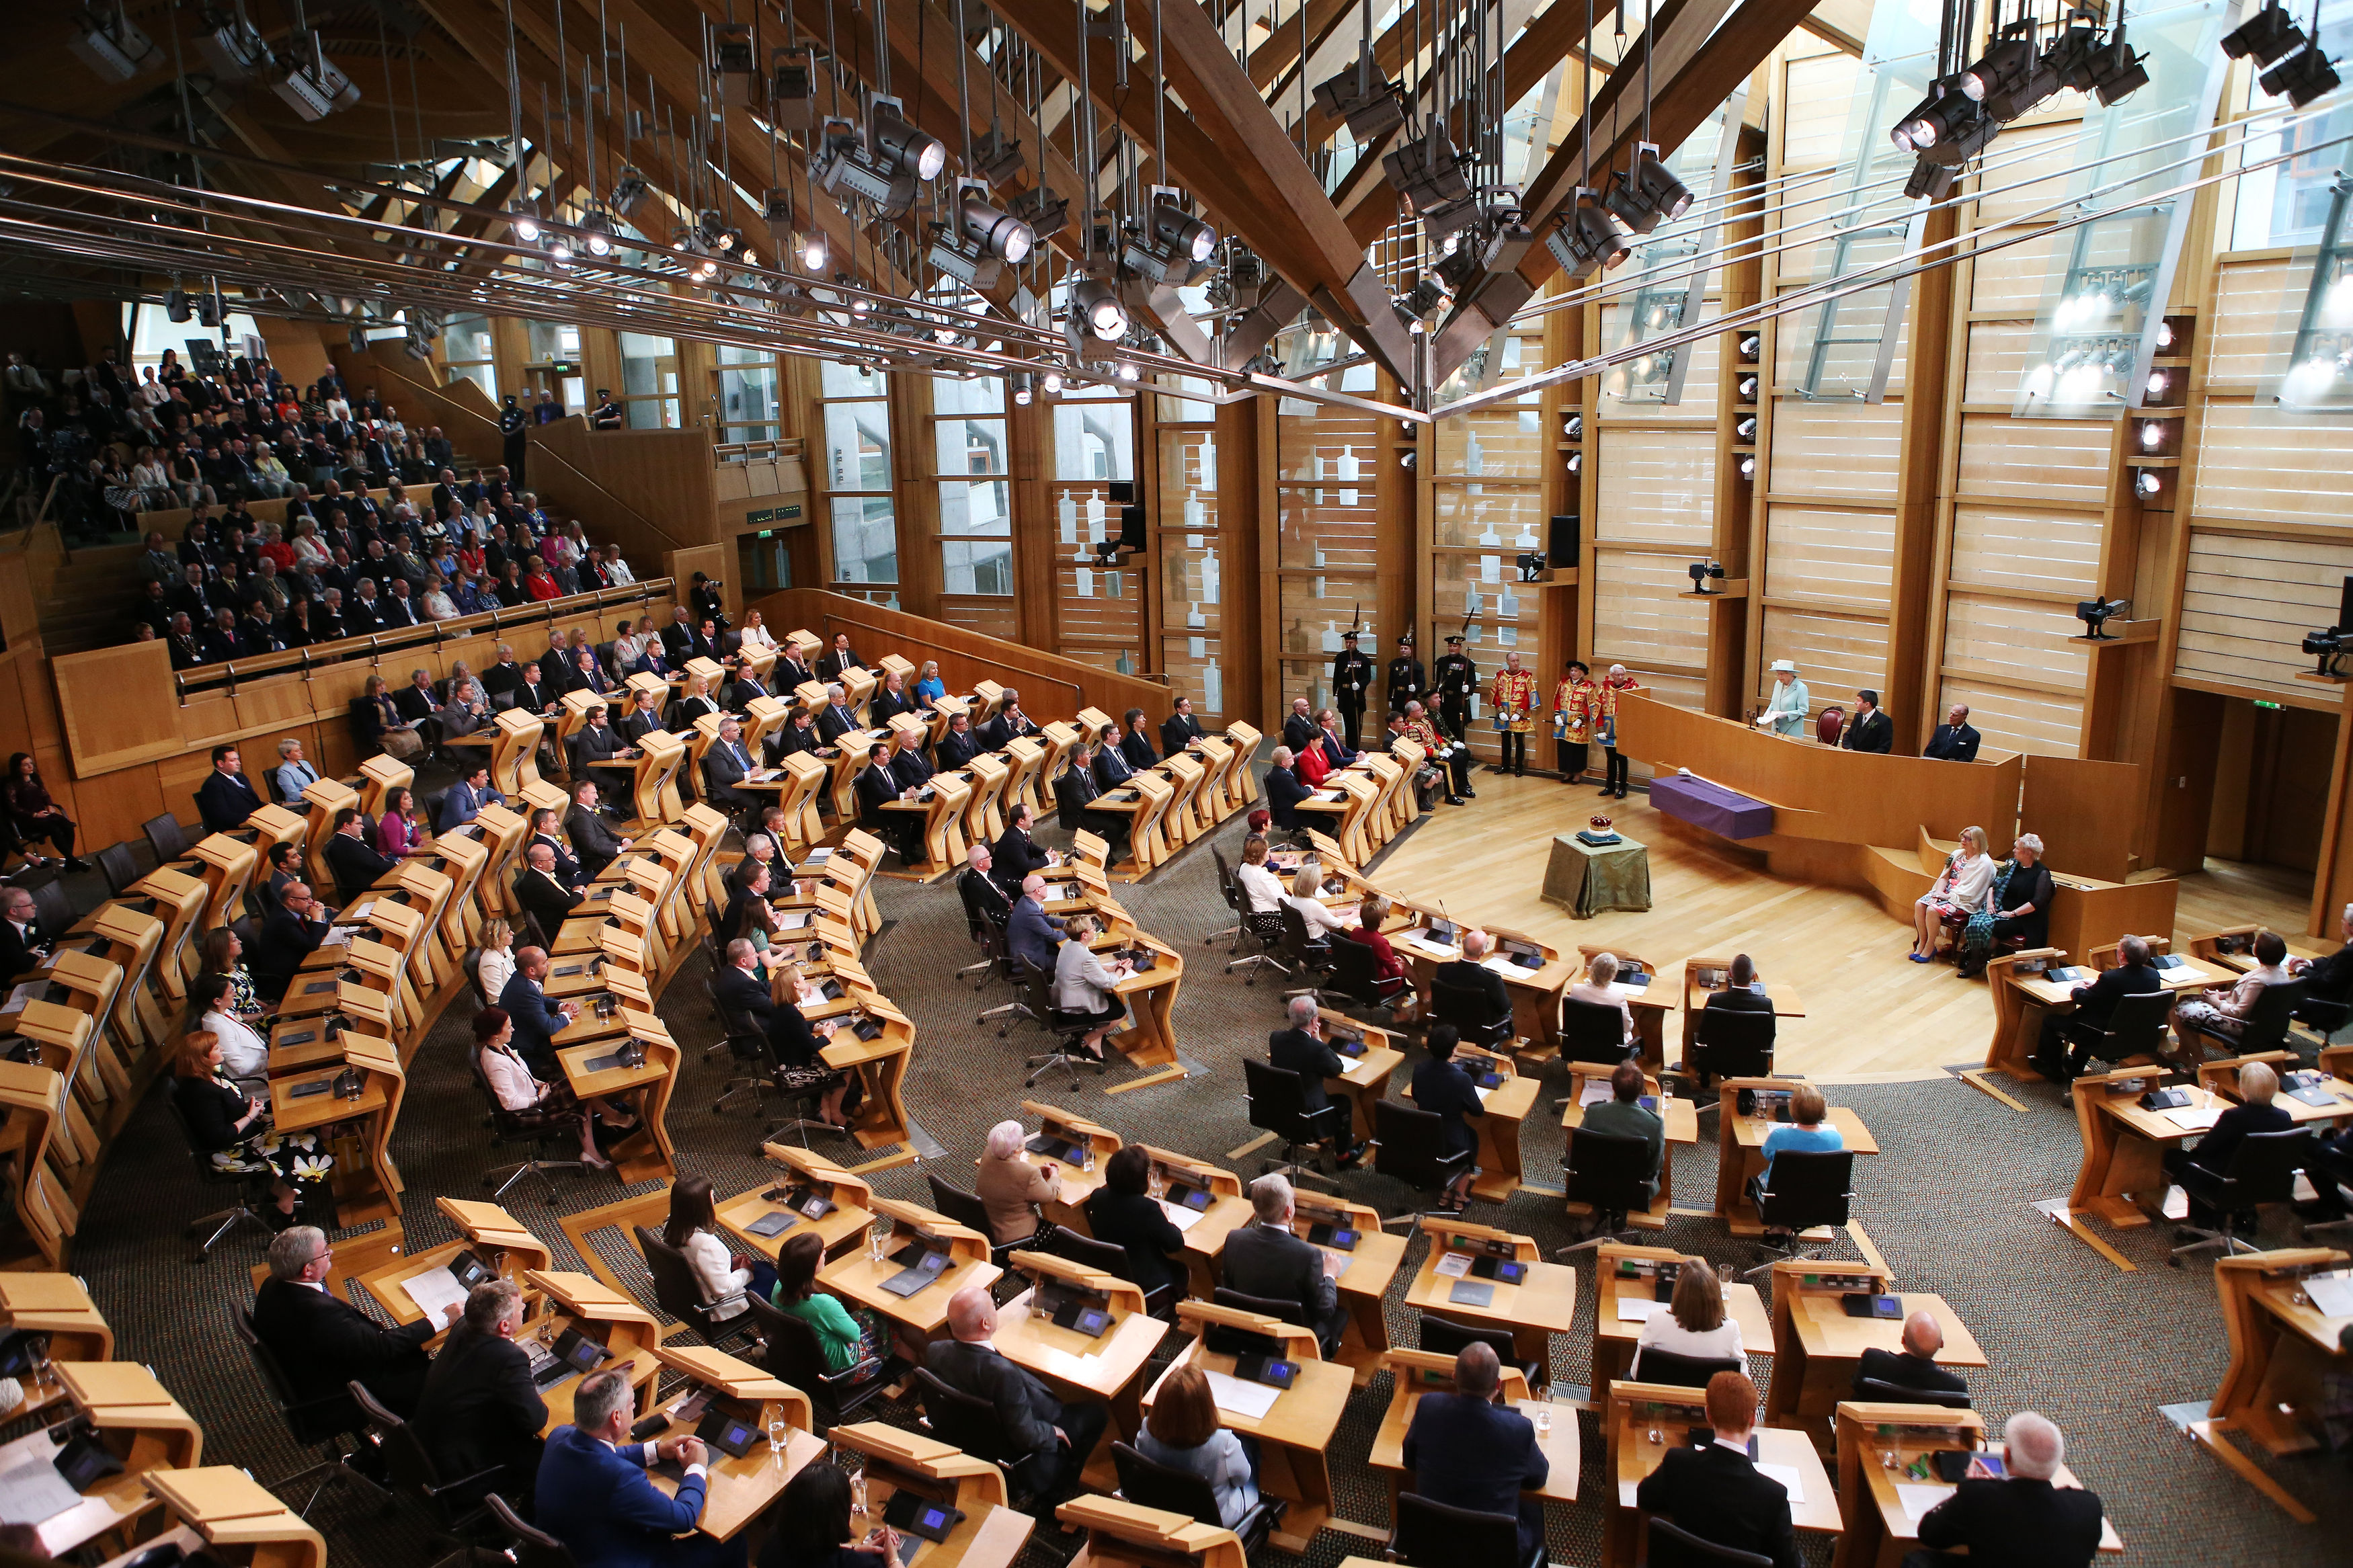 Scottish Parliament (PA)